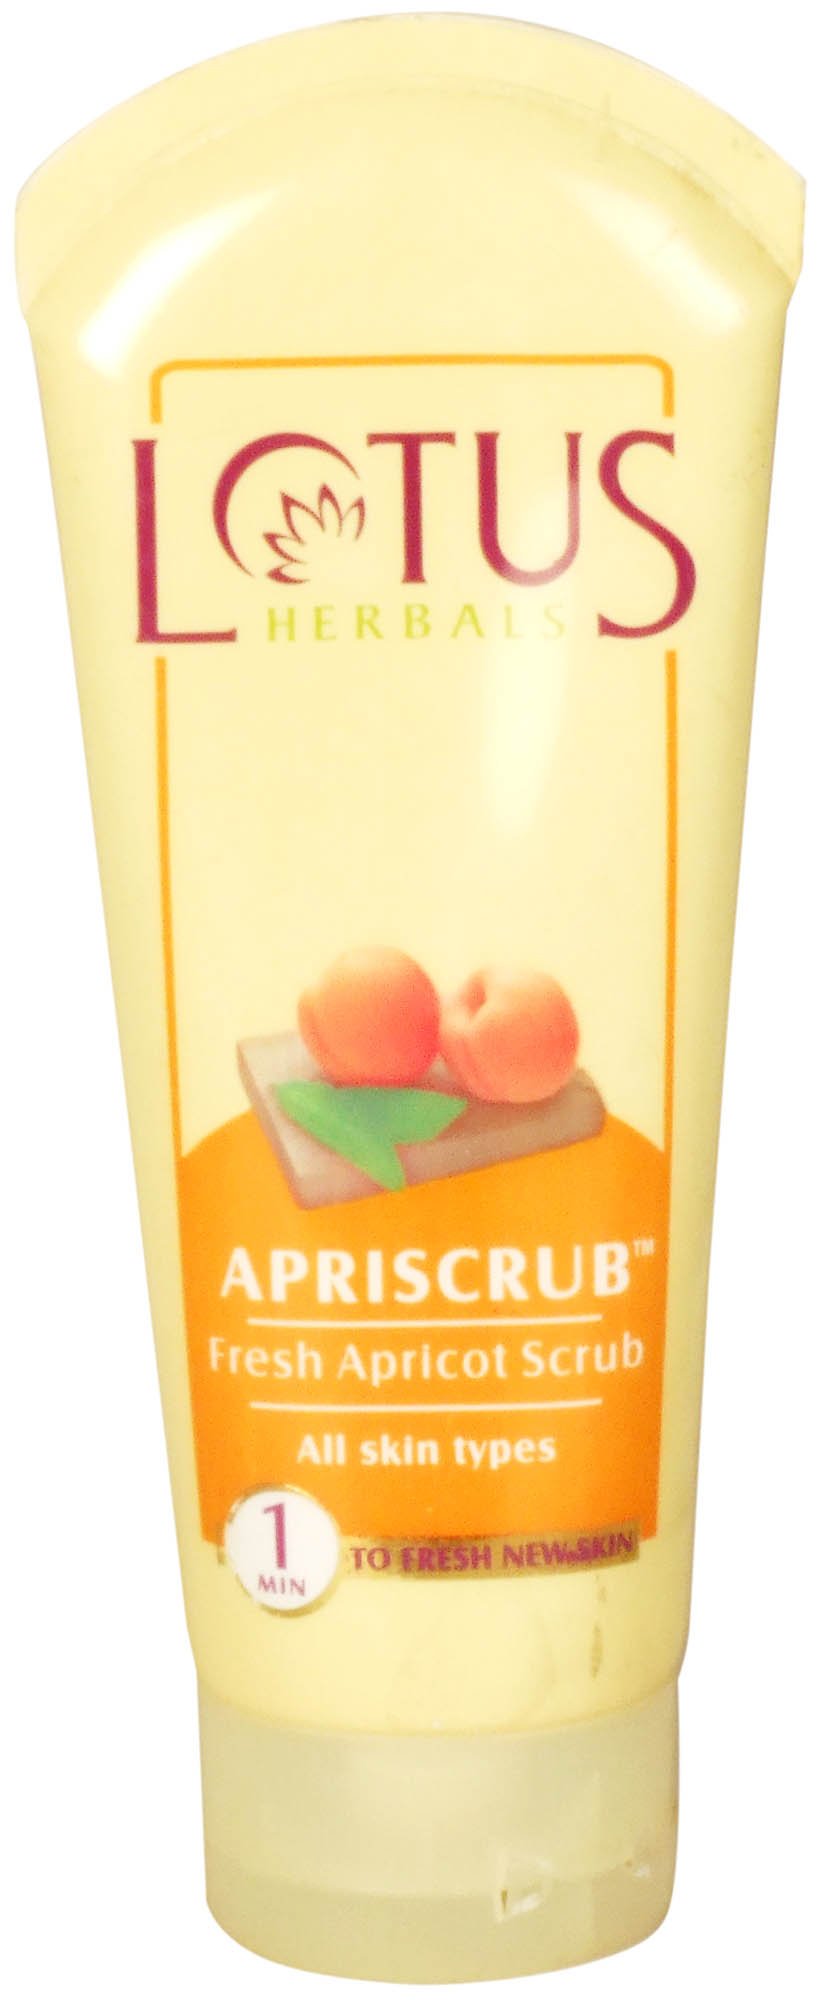 Apriscrub Fresh Apricot Scrub (All Skin Types) - book cover